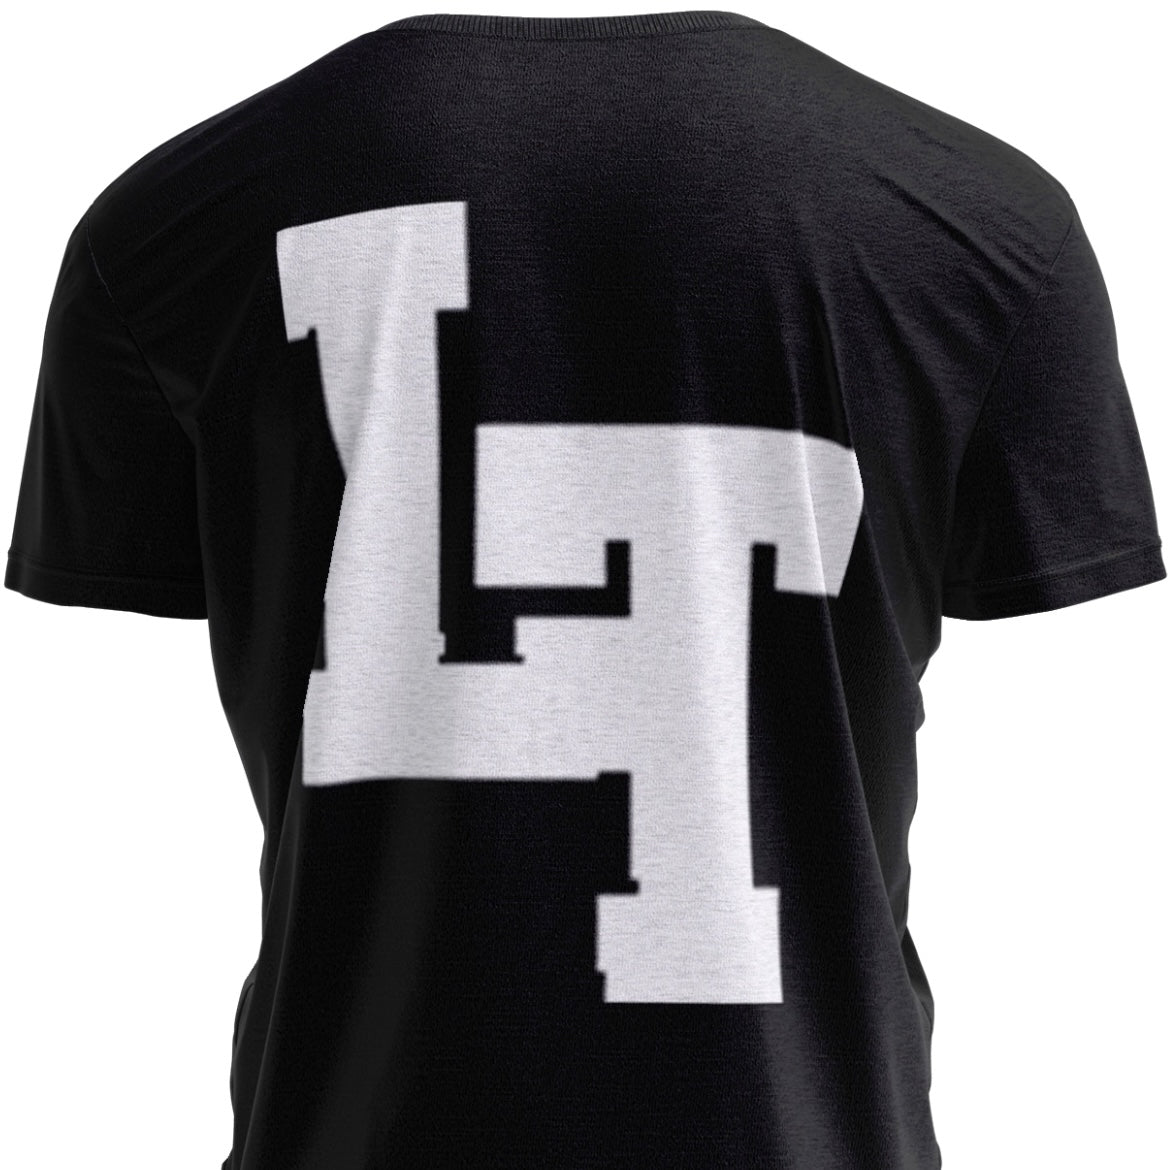 LT Signature Hand T-Shirt (Black)